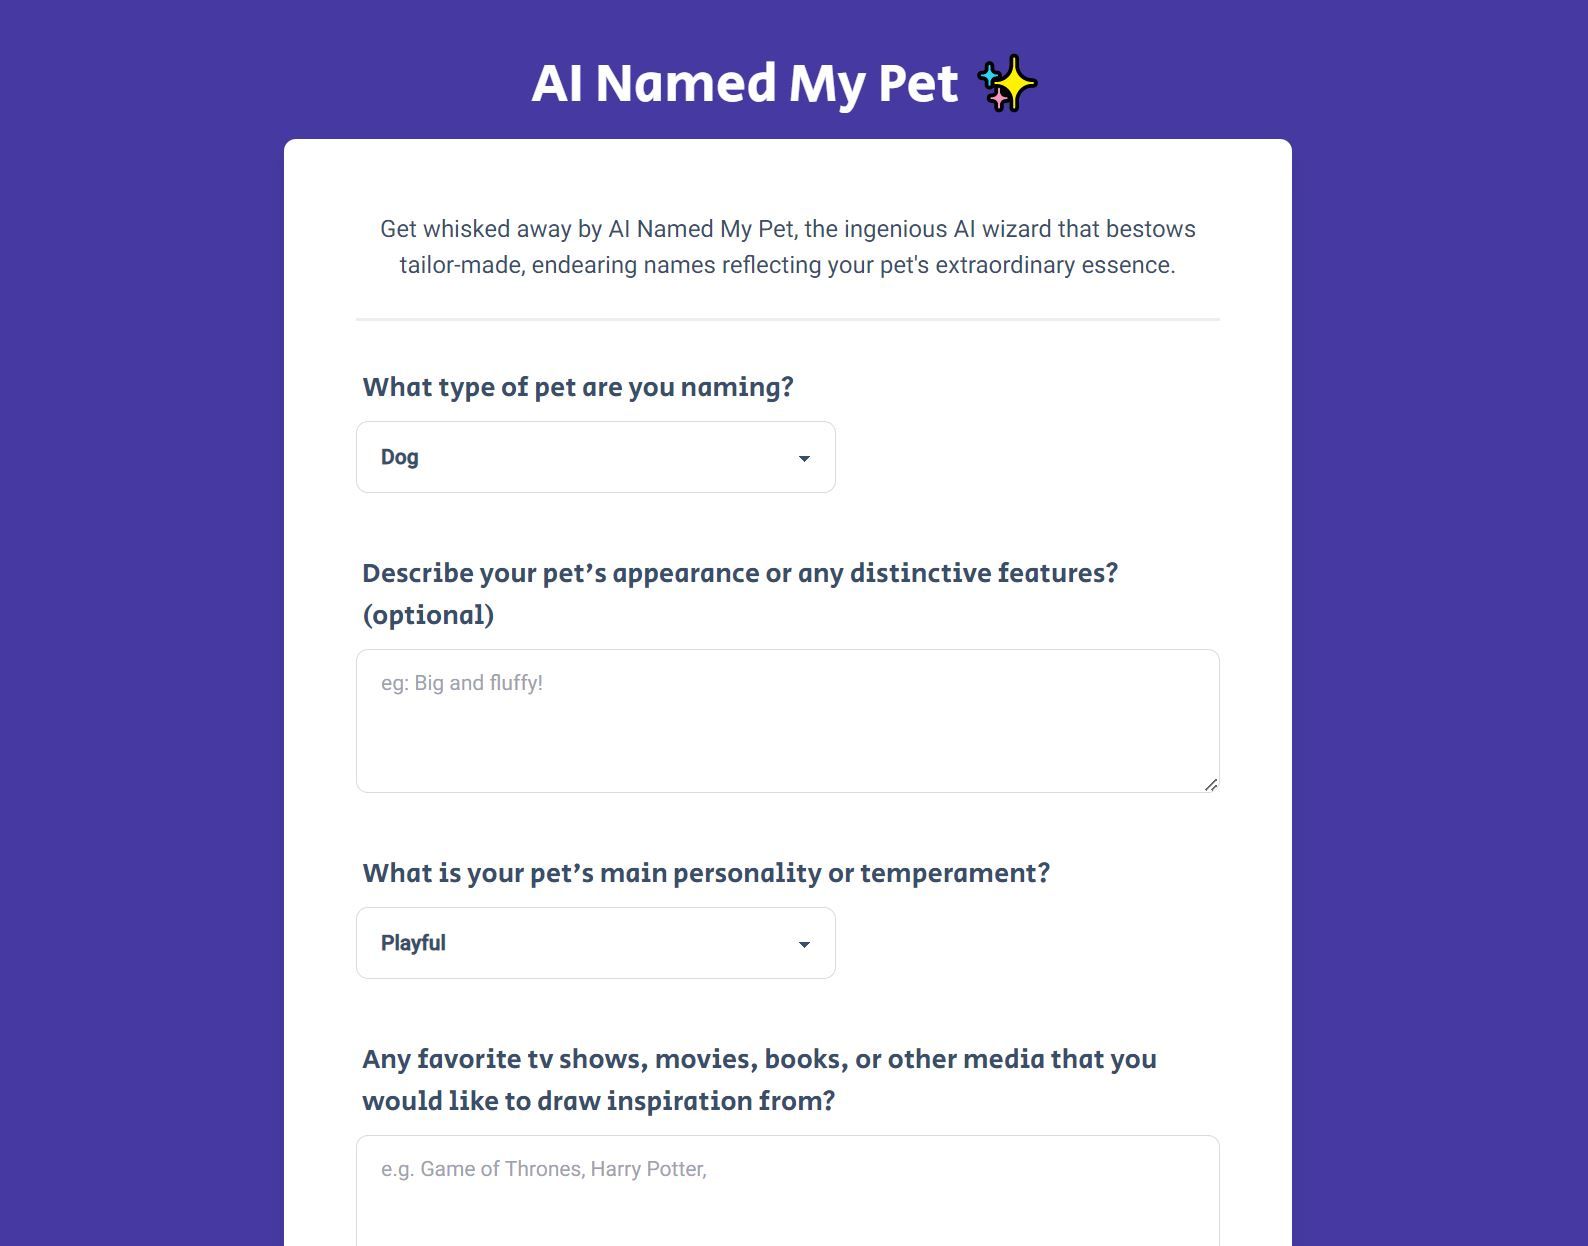 Post: AI Named My Pet